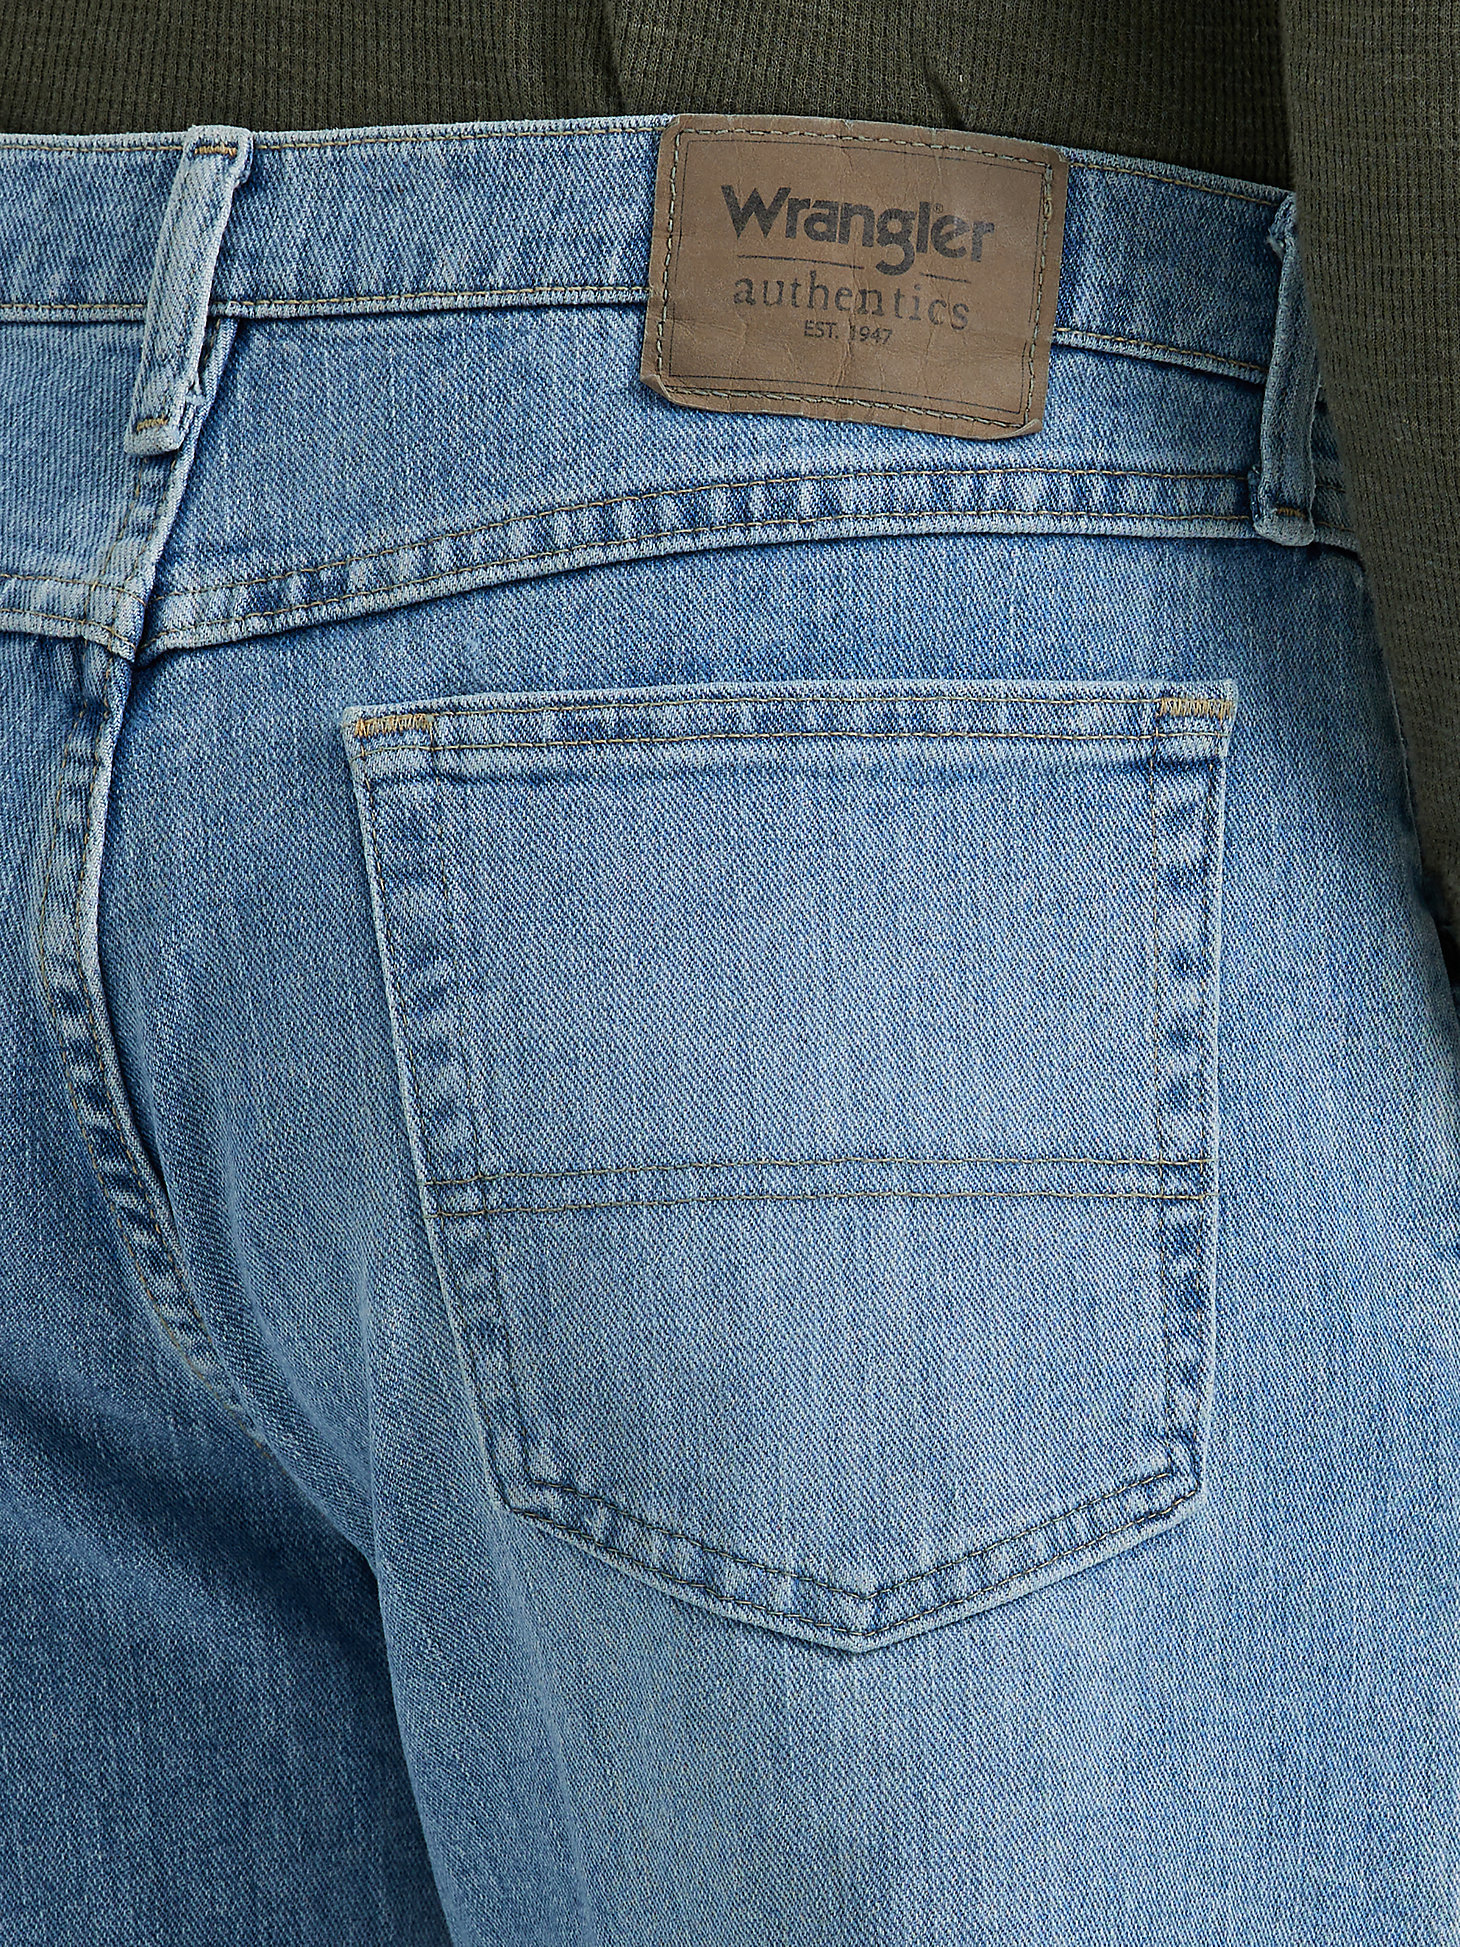 Men's Wrangler Authentics® Relaxed Fit Flex Jean in Stonewash Light alternative view 2